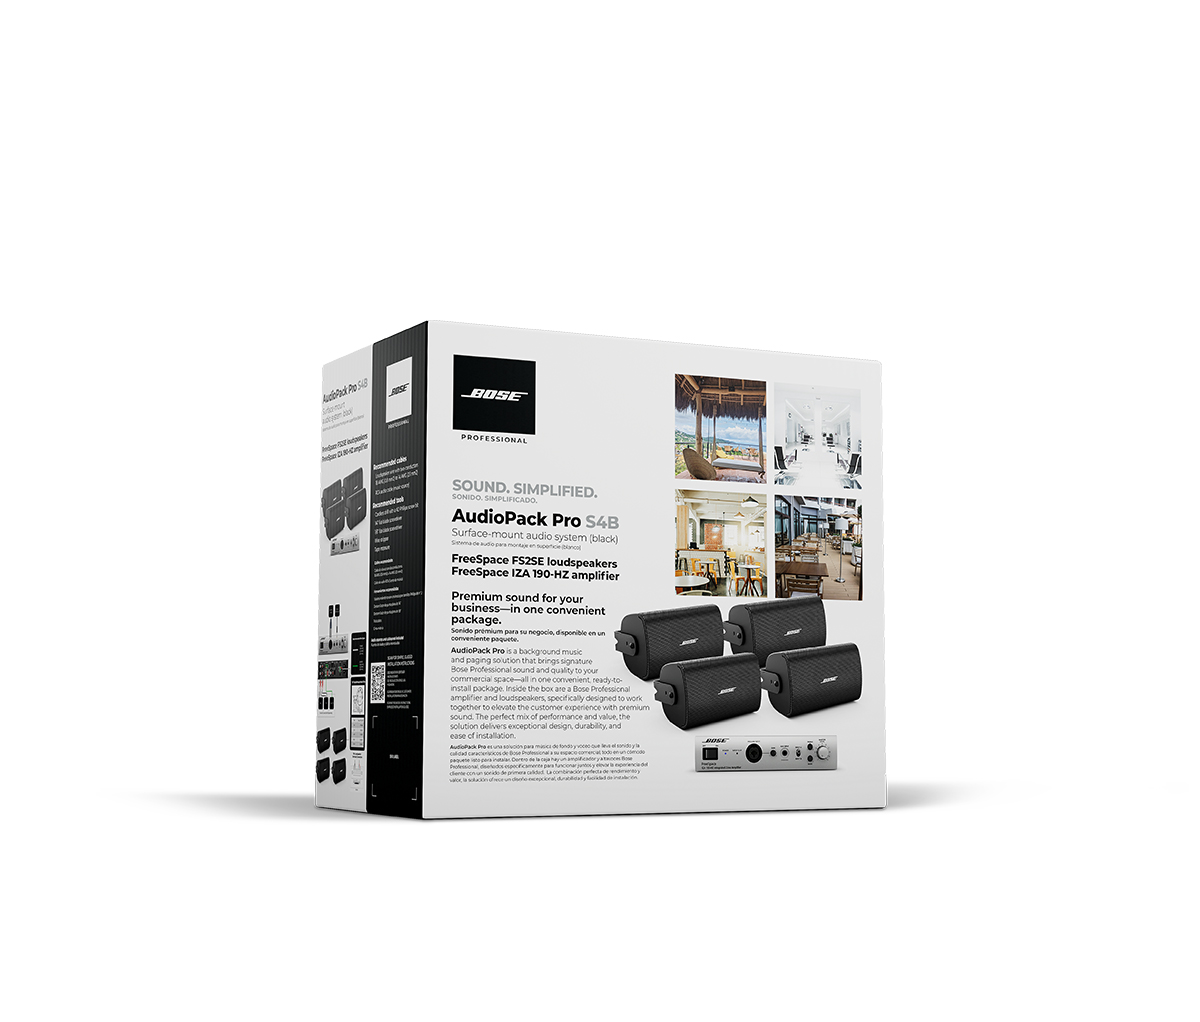 Bose AudioPack Pro S4B